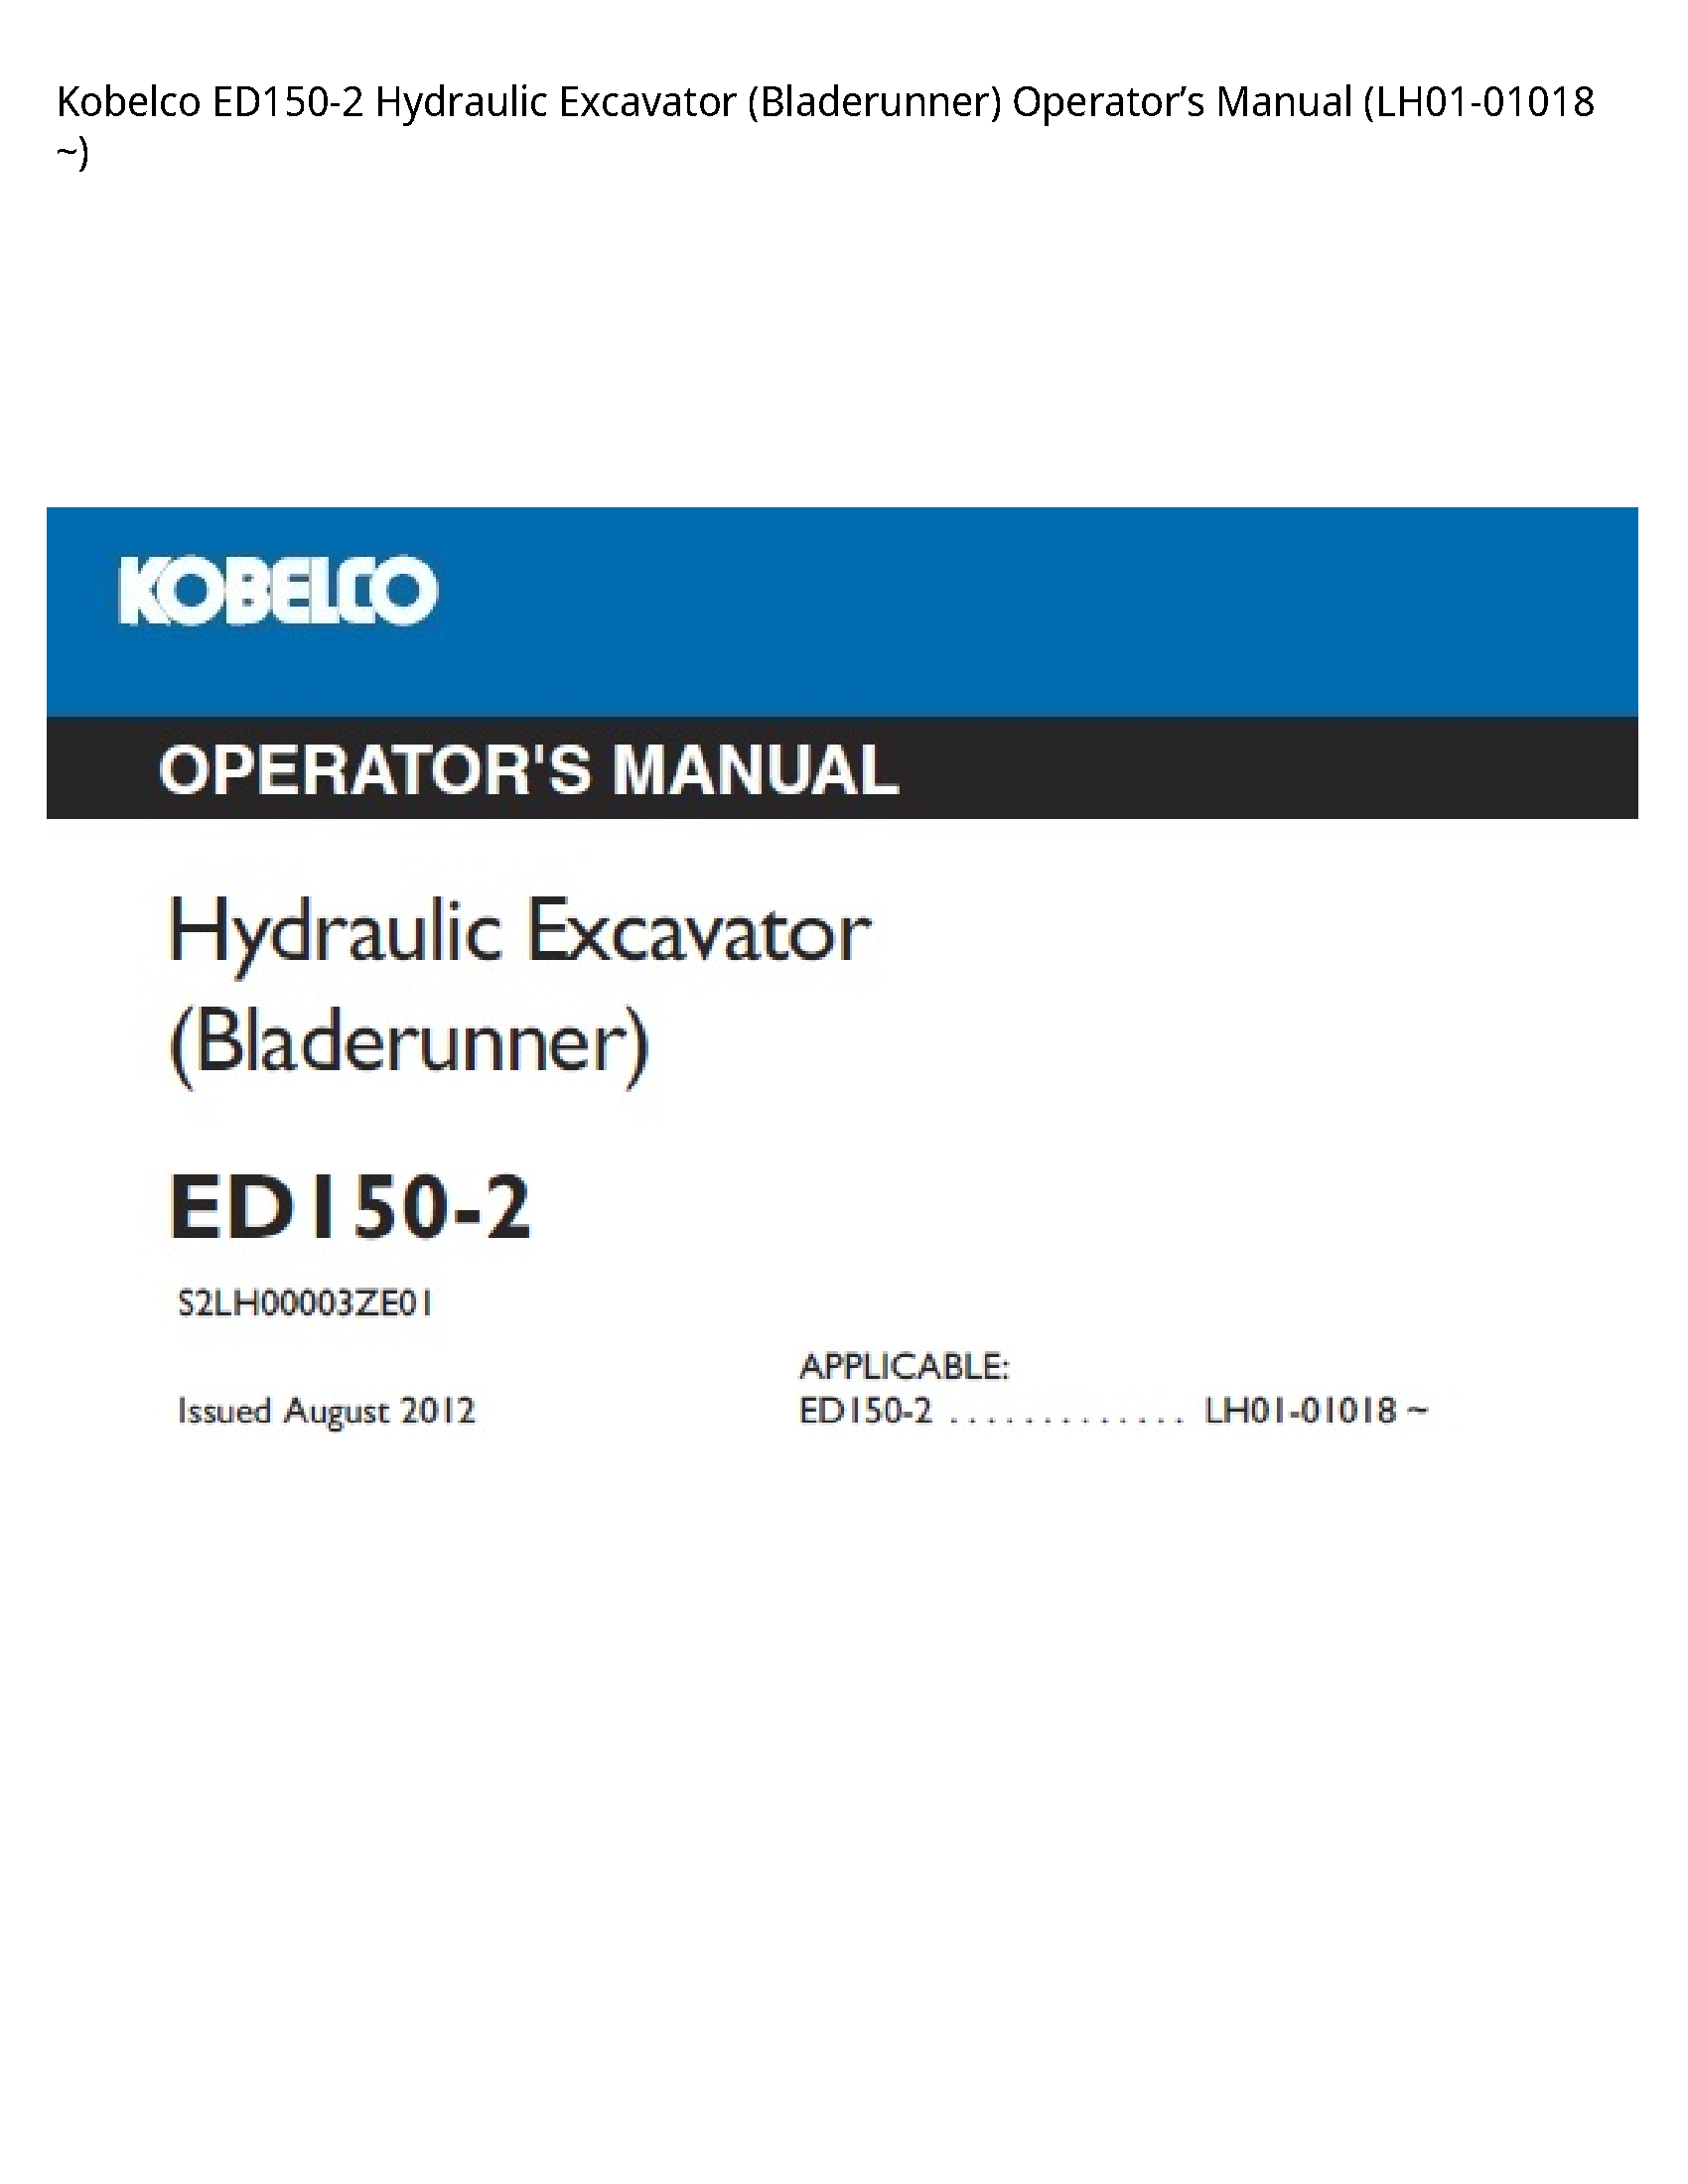 Kobelco ED150-2 Hydraulic Excavator (Bladerunner) Operator’s manual